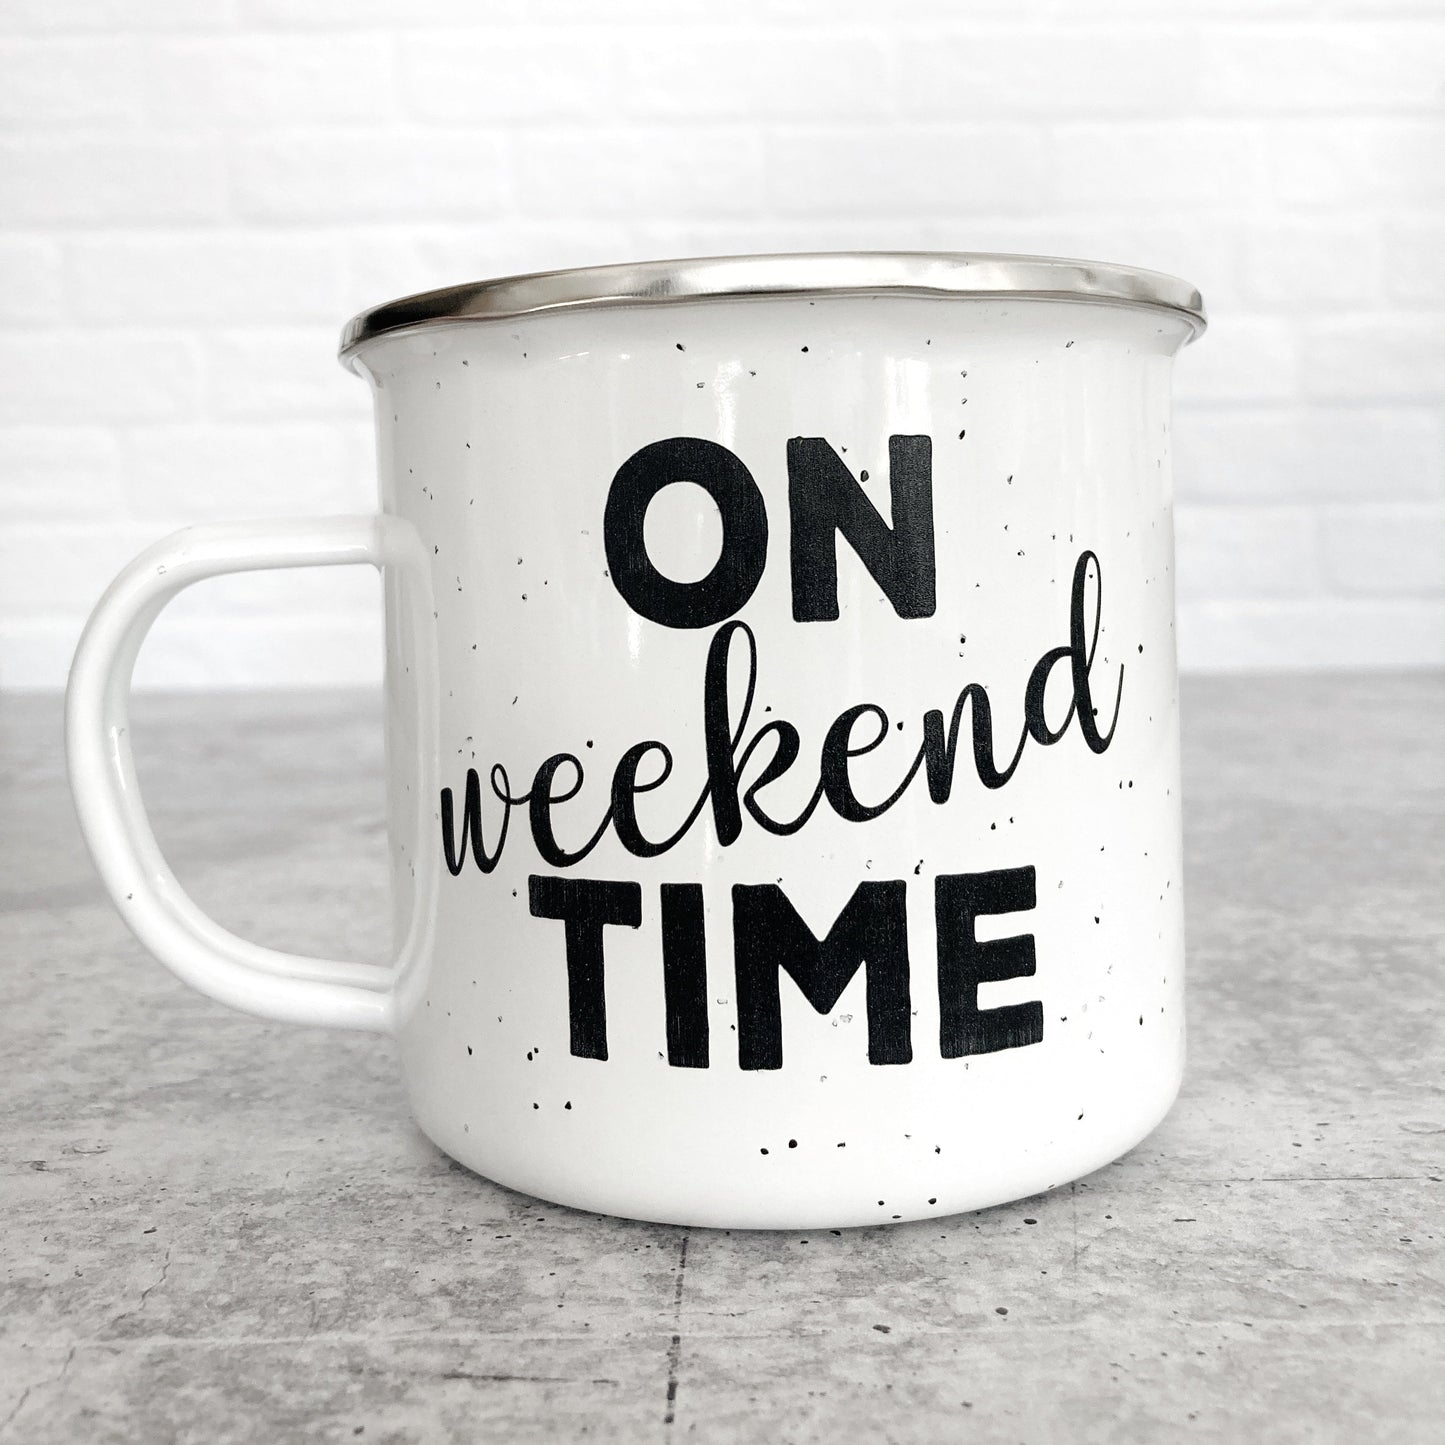 On Weekend Time Design on a white enamel mug